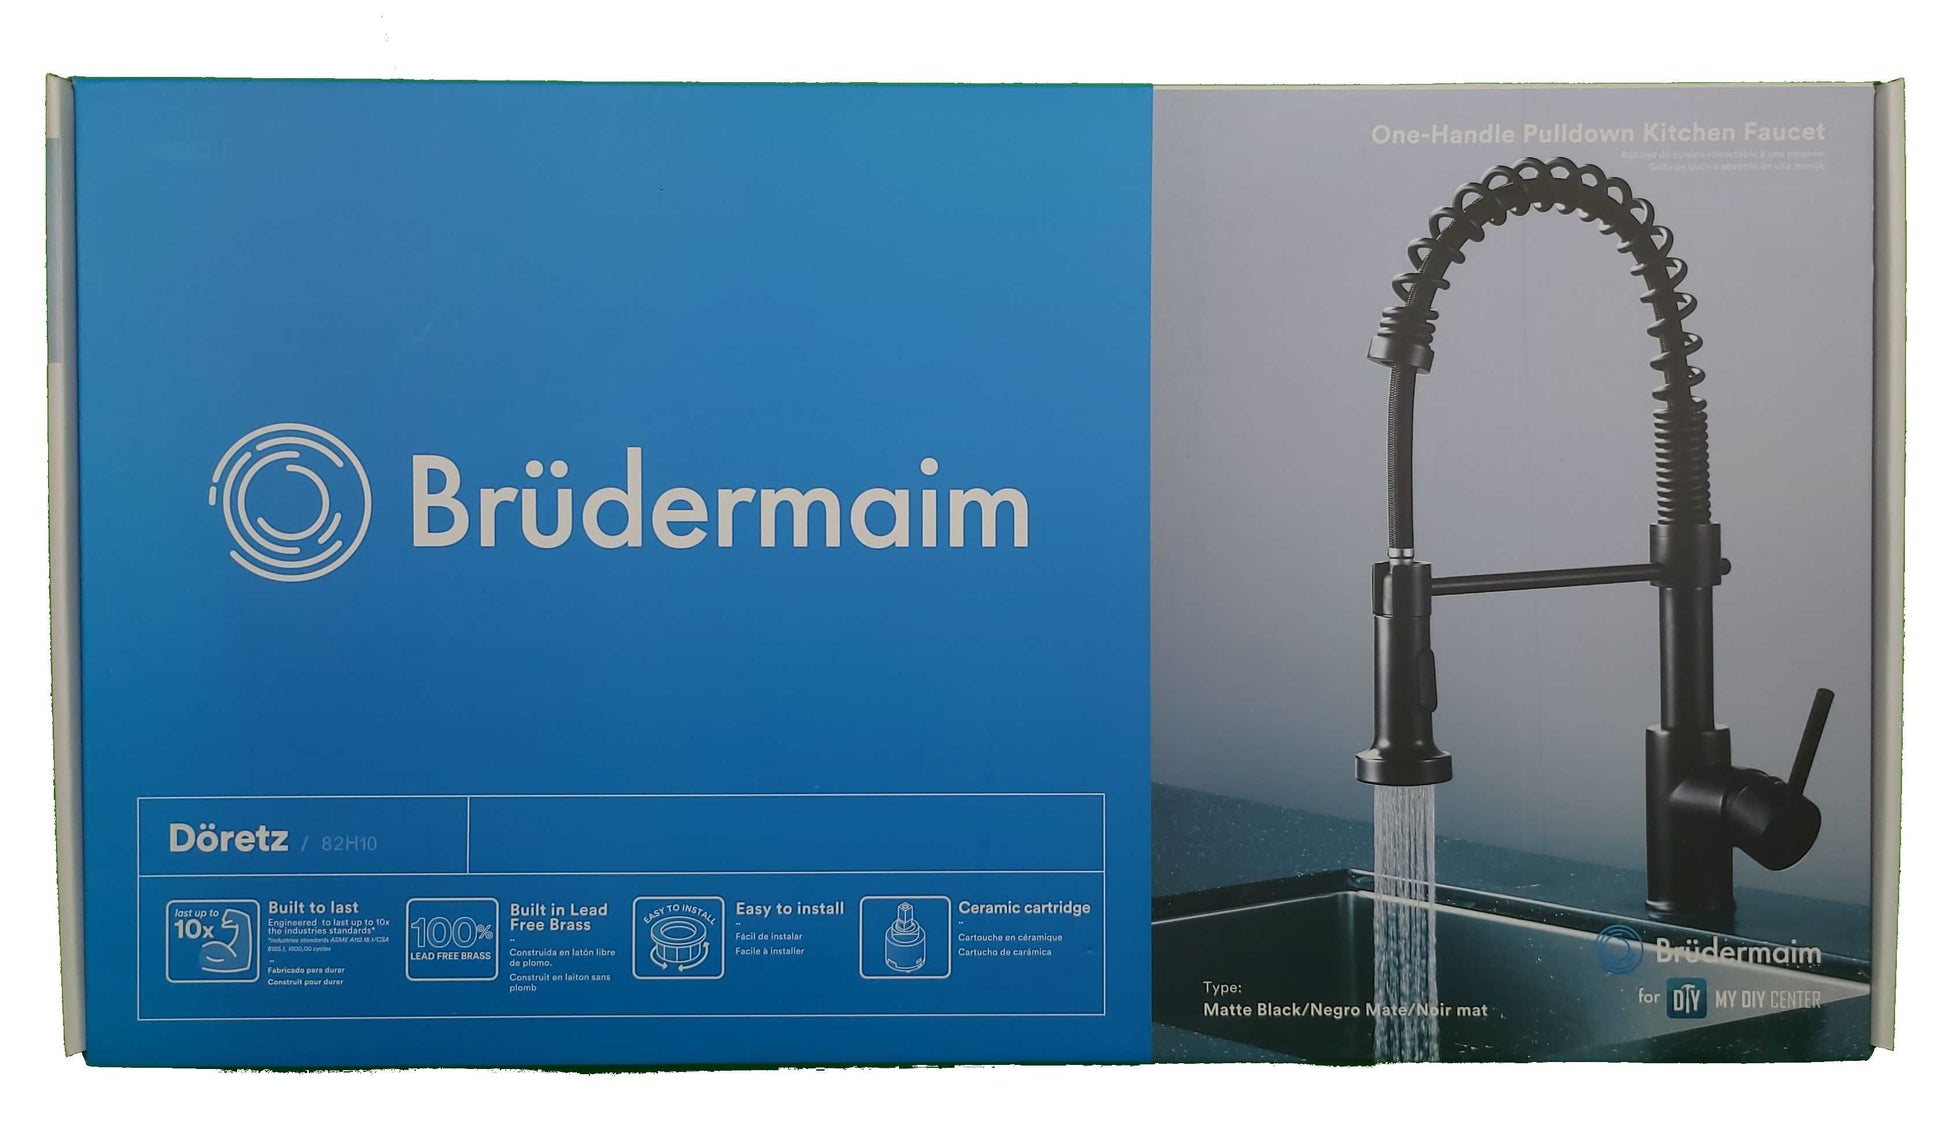 Pulldown Kitchen Faucet - BRÜDERMAIM Döretz - Matte Black - Lead Free Brass - cUPC Certified - Ceramic Cartridge.